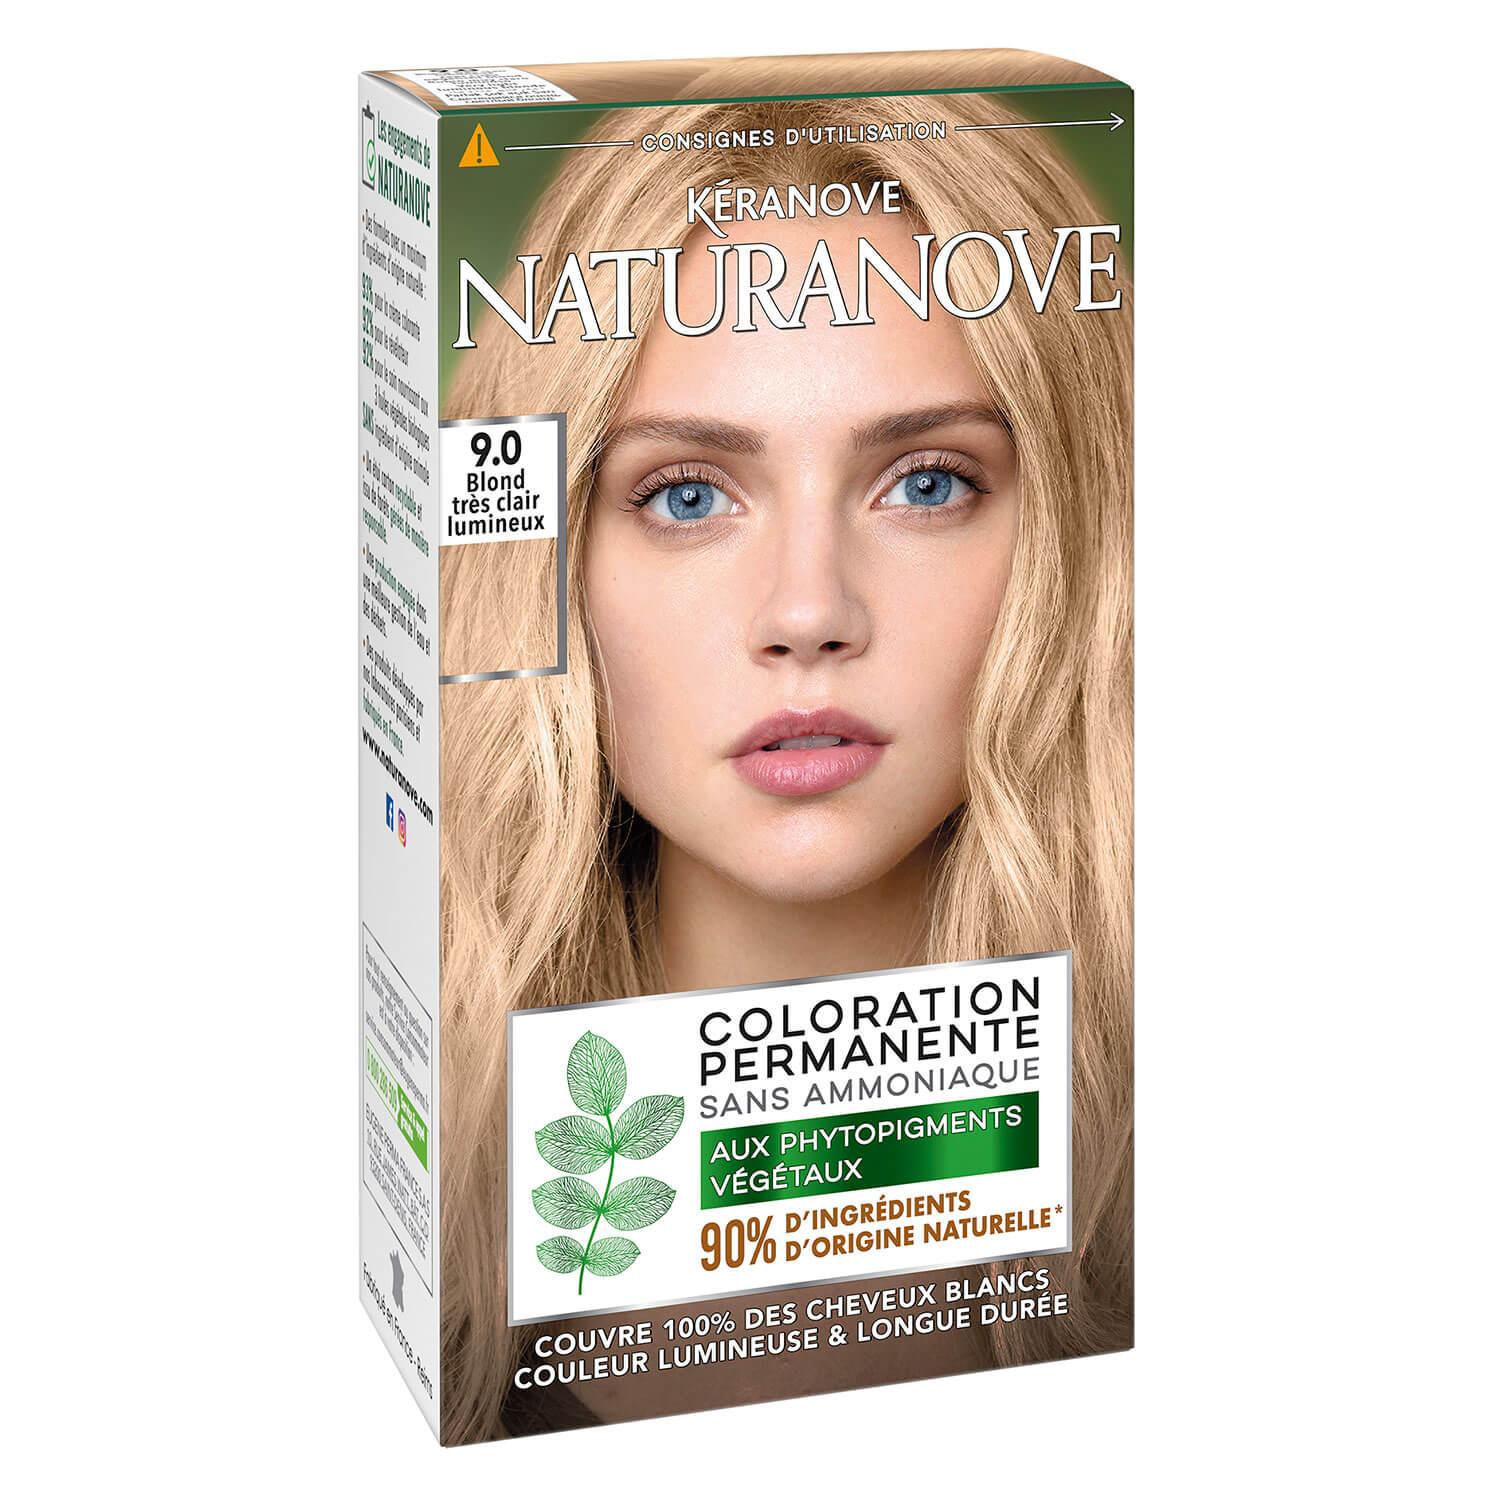 Naturanove - Coloration Permanente Blond Très Clair Lumineux 9.0